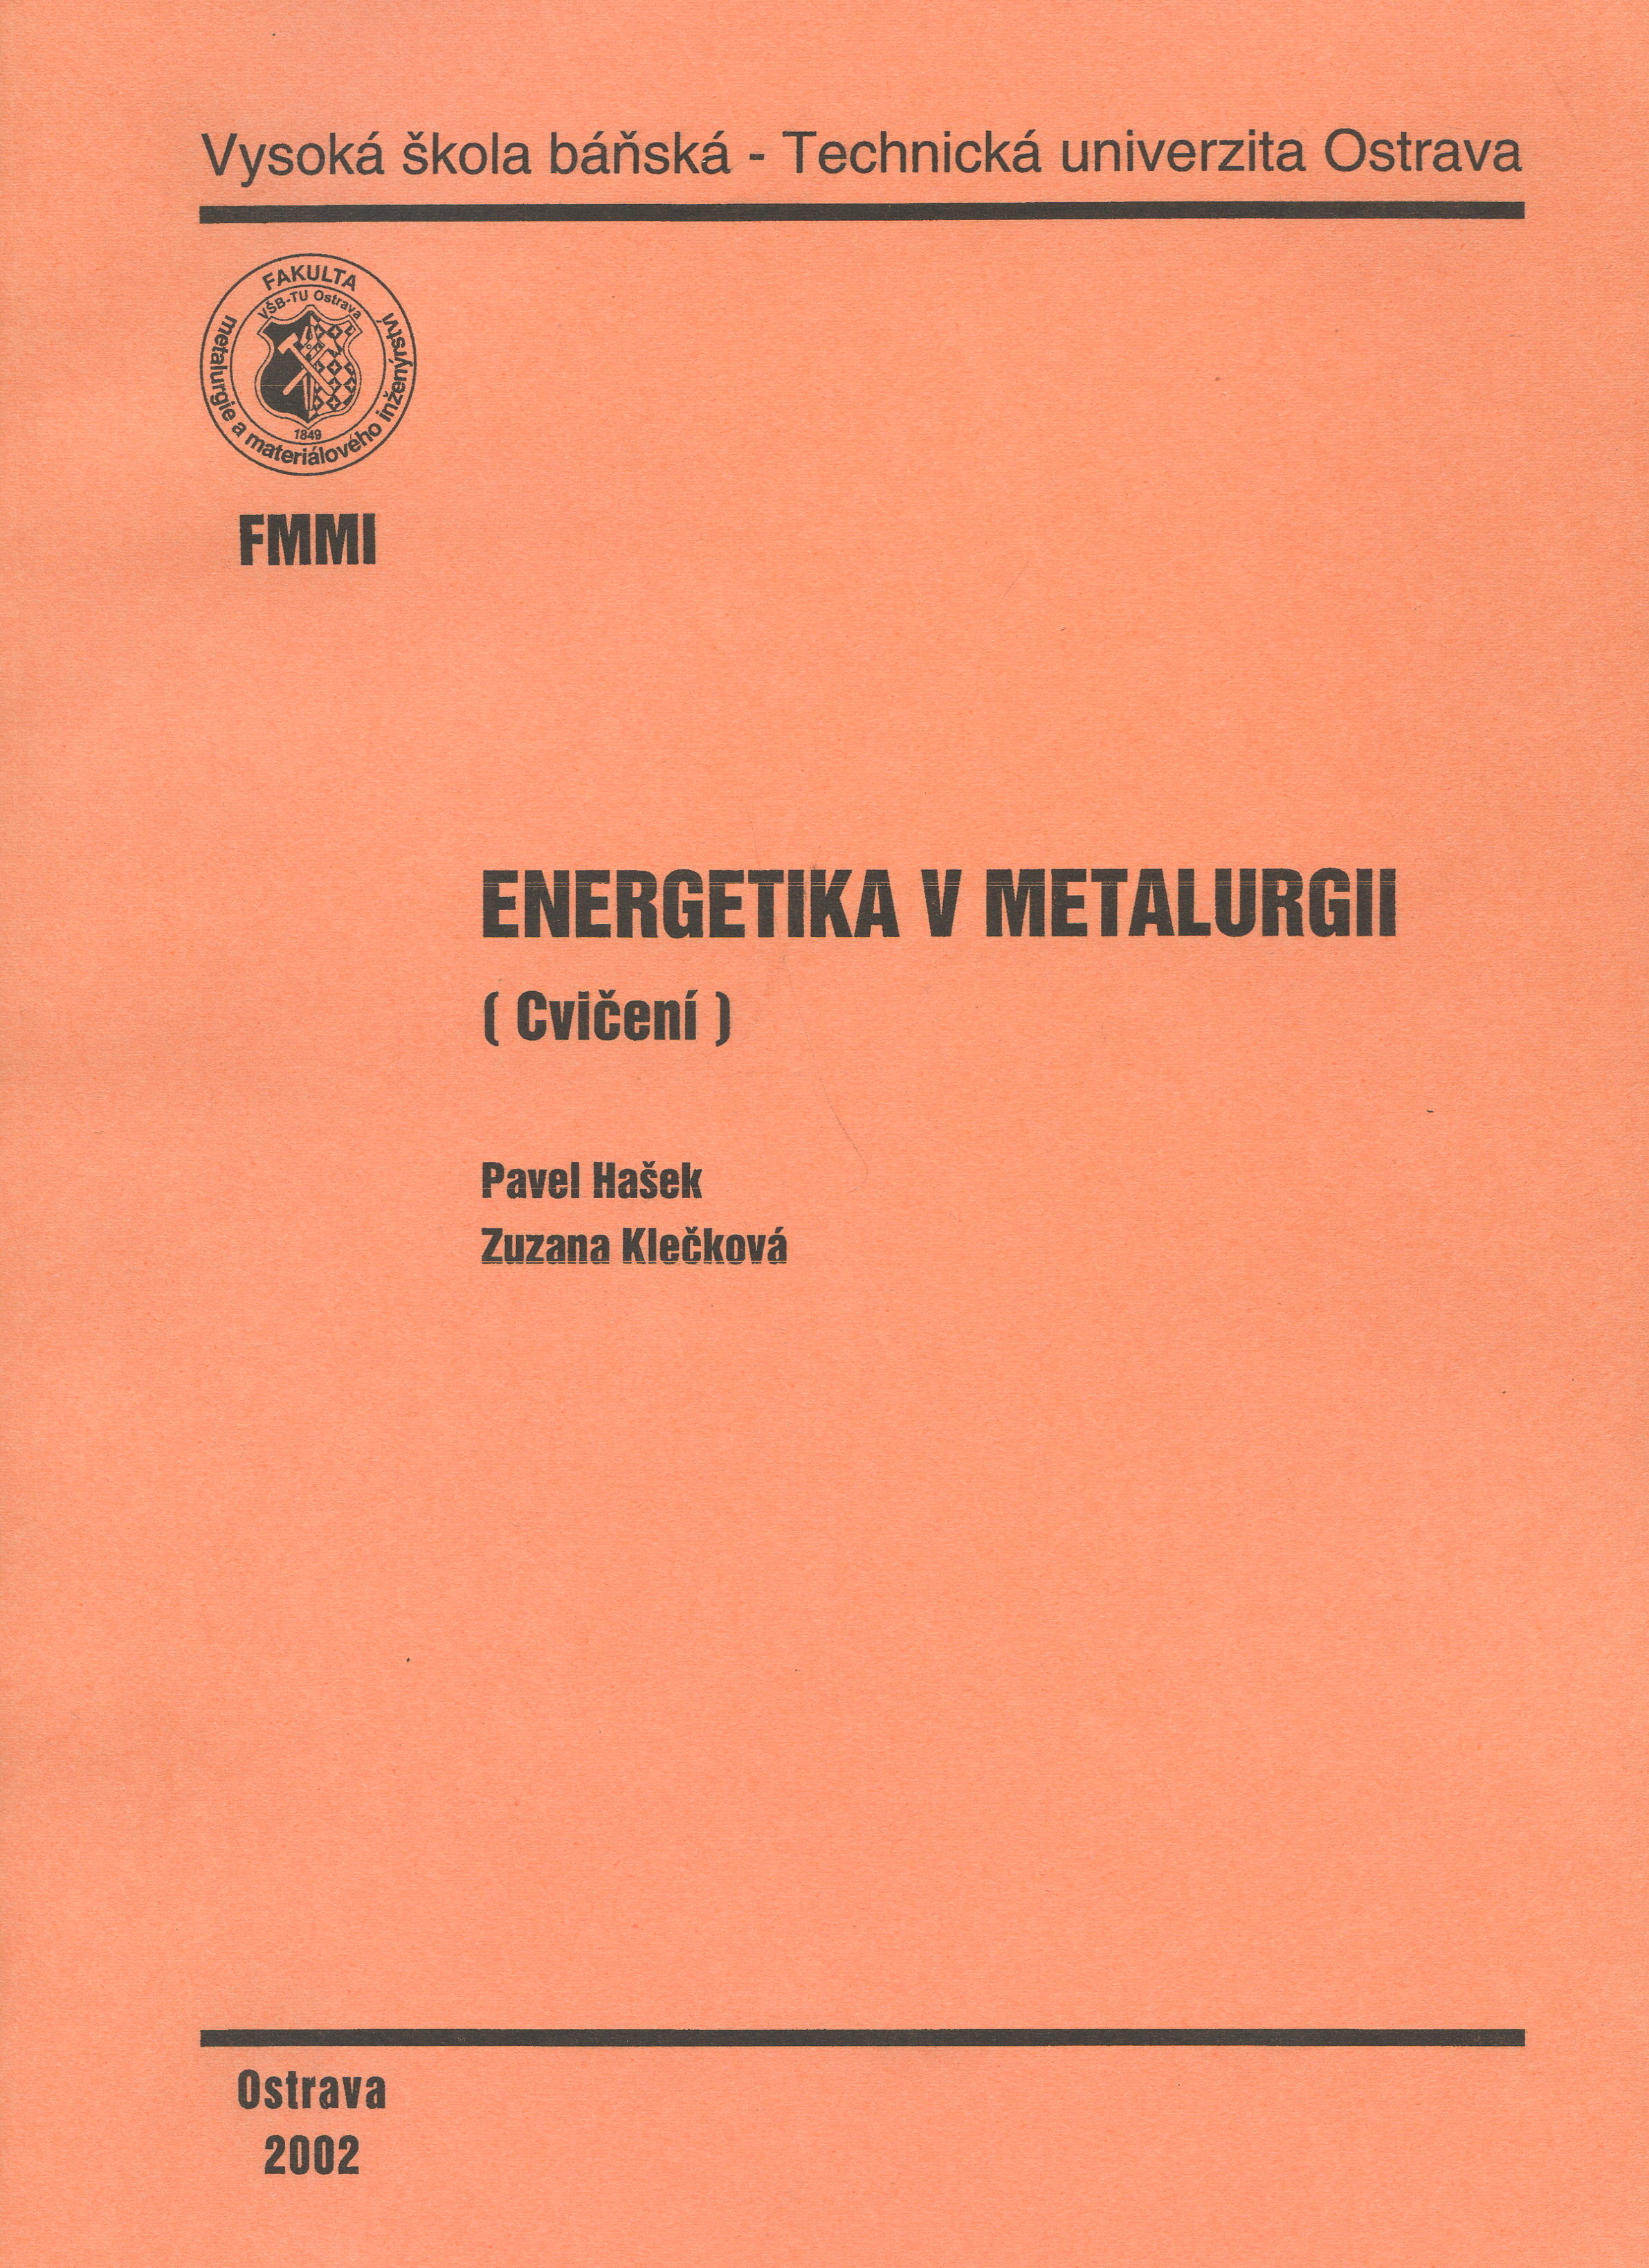 Energetika v metalurgii - cvičení